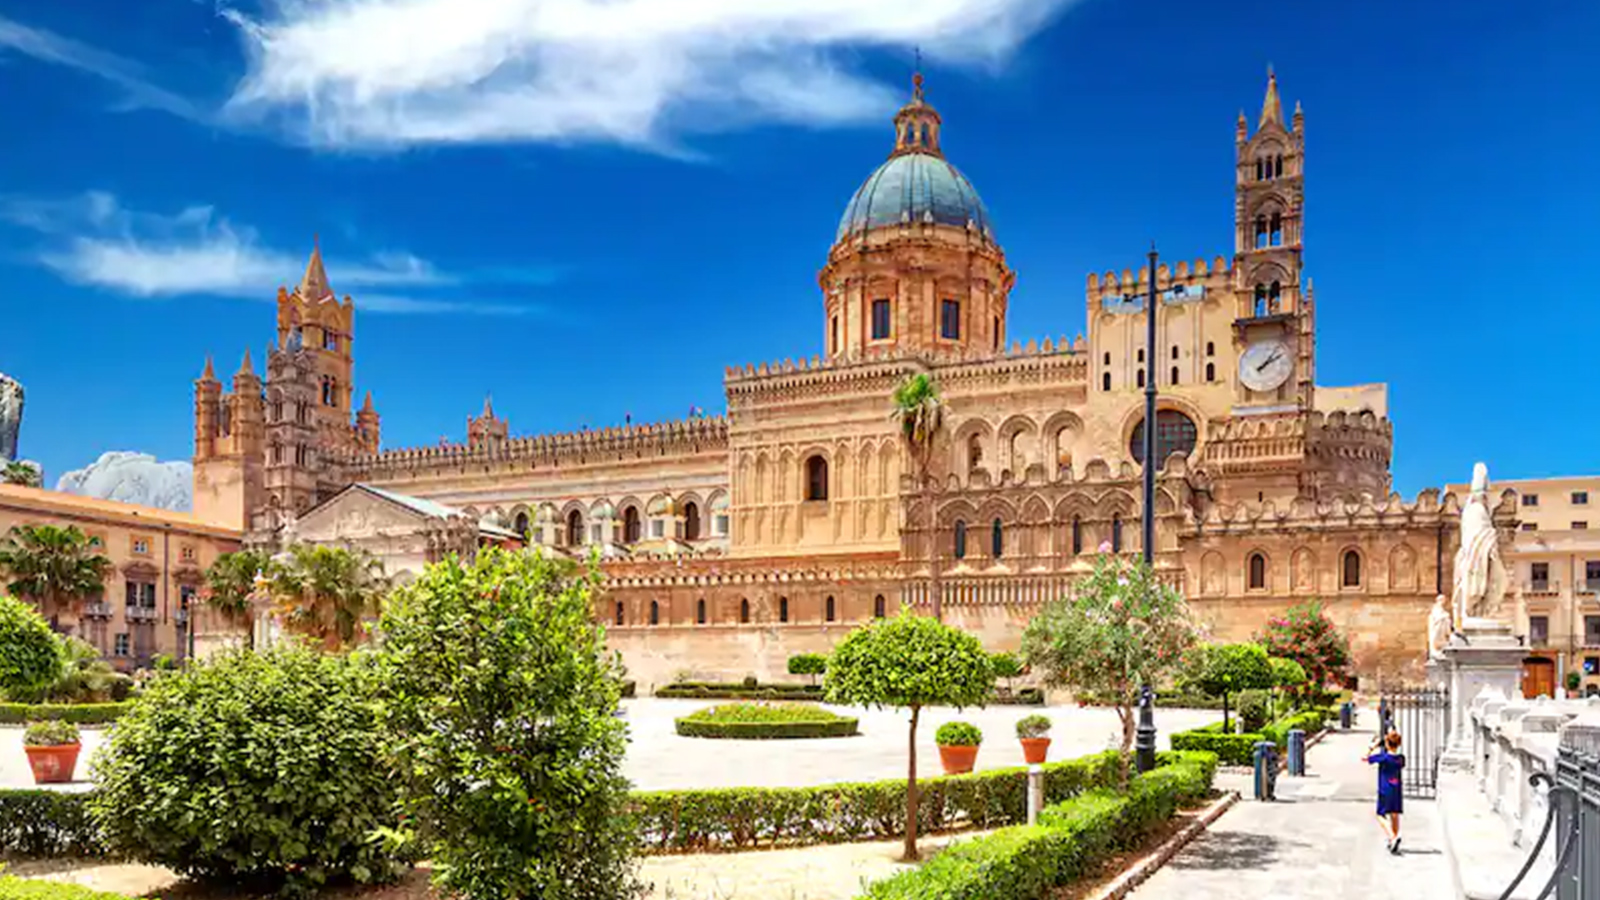 Image of Palermo, Sicily